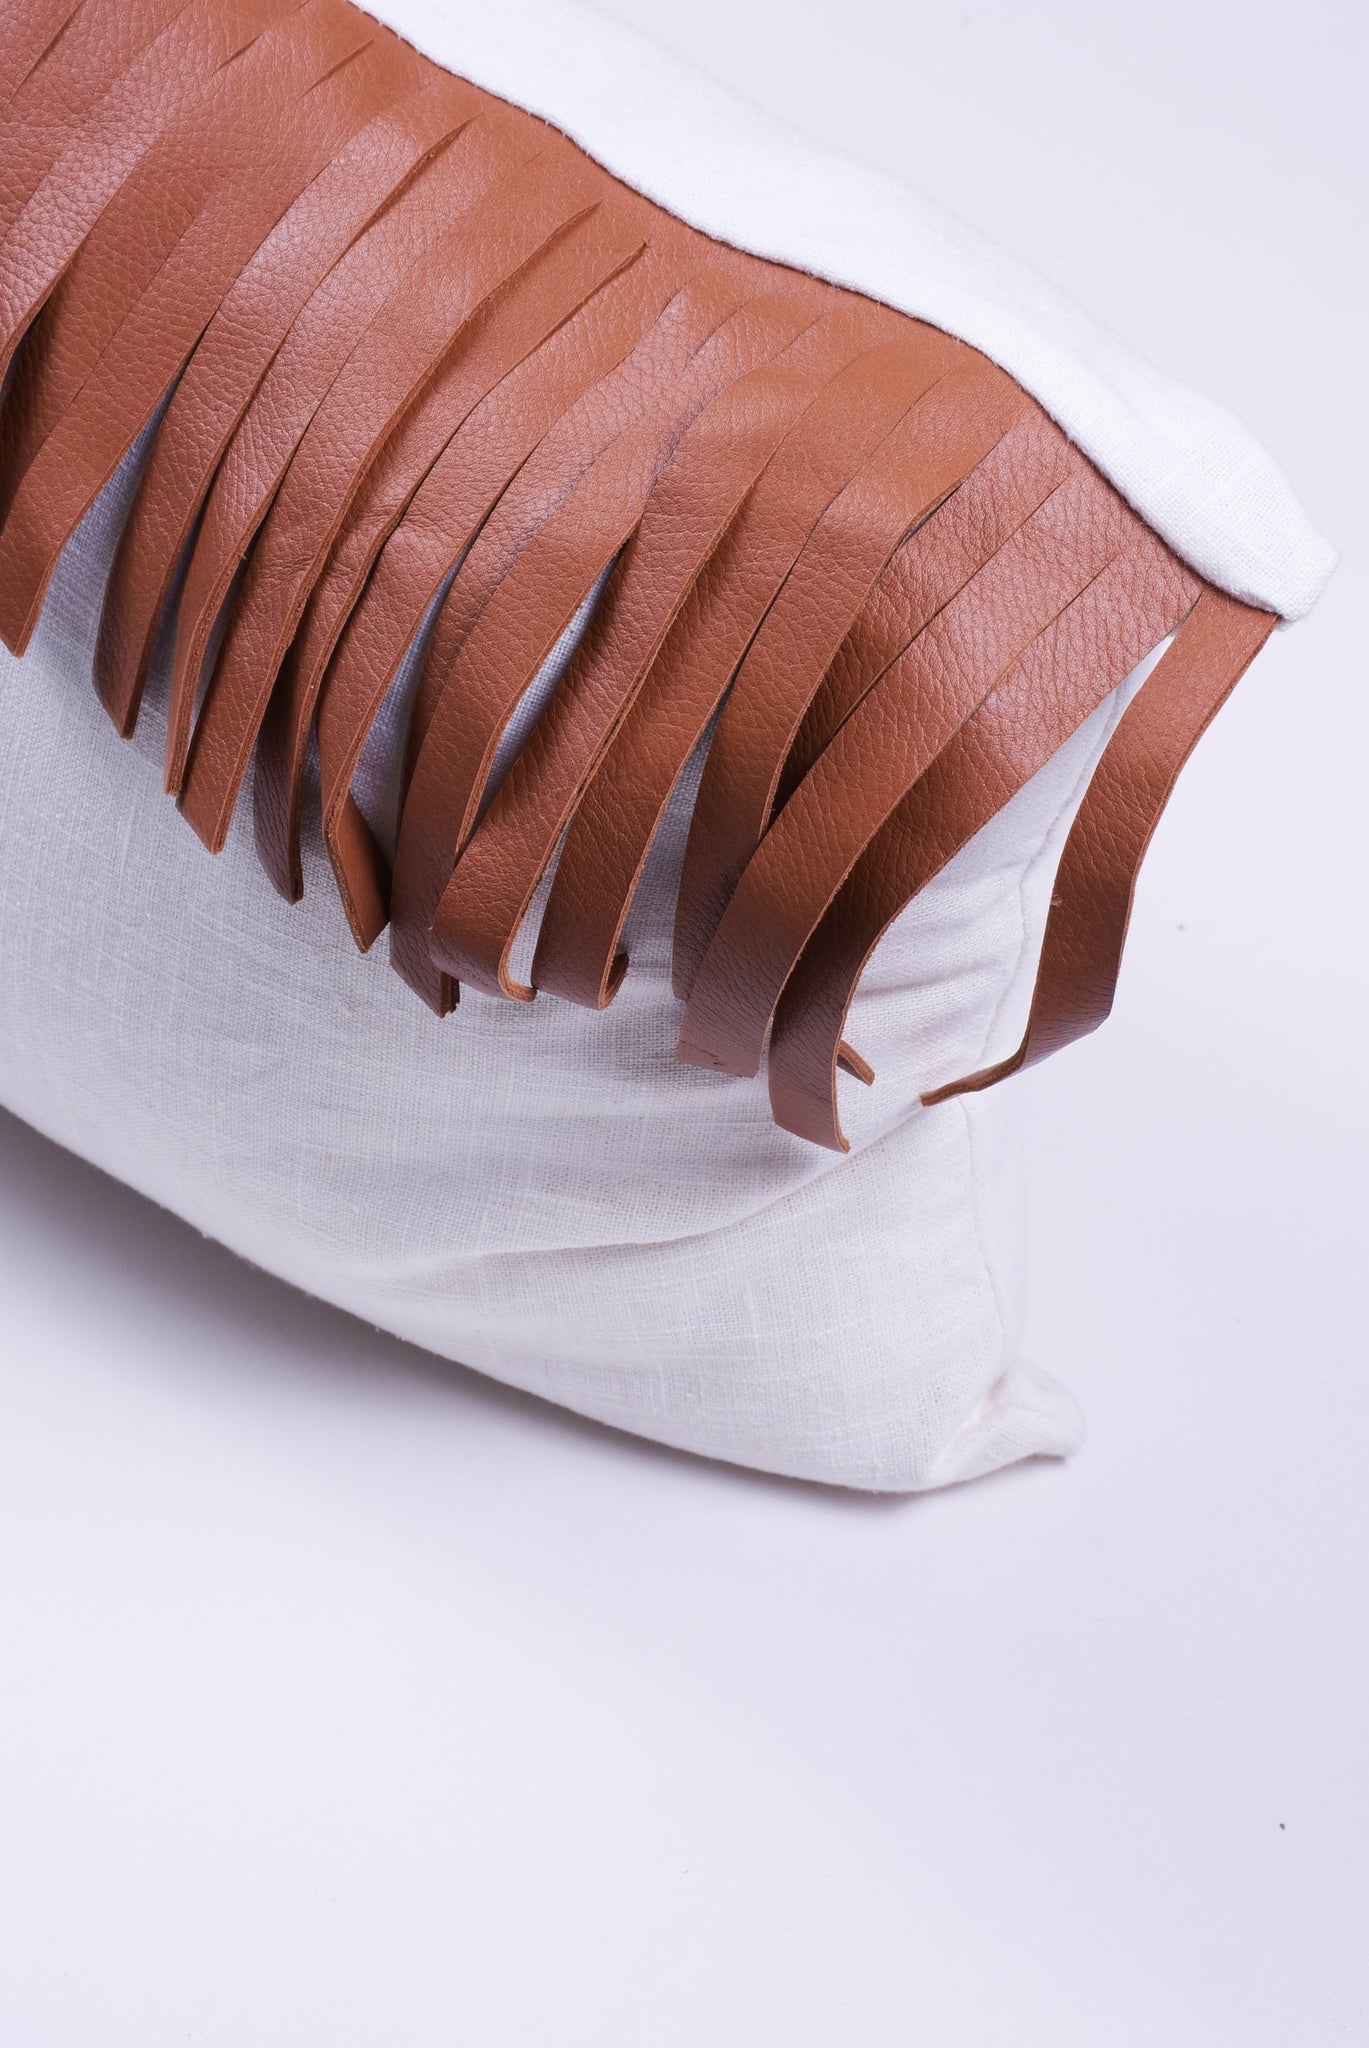 Saddle Leather Fringes Lumbar Pillow